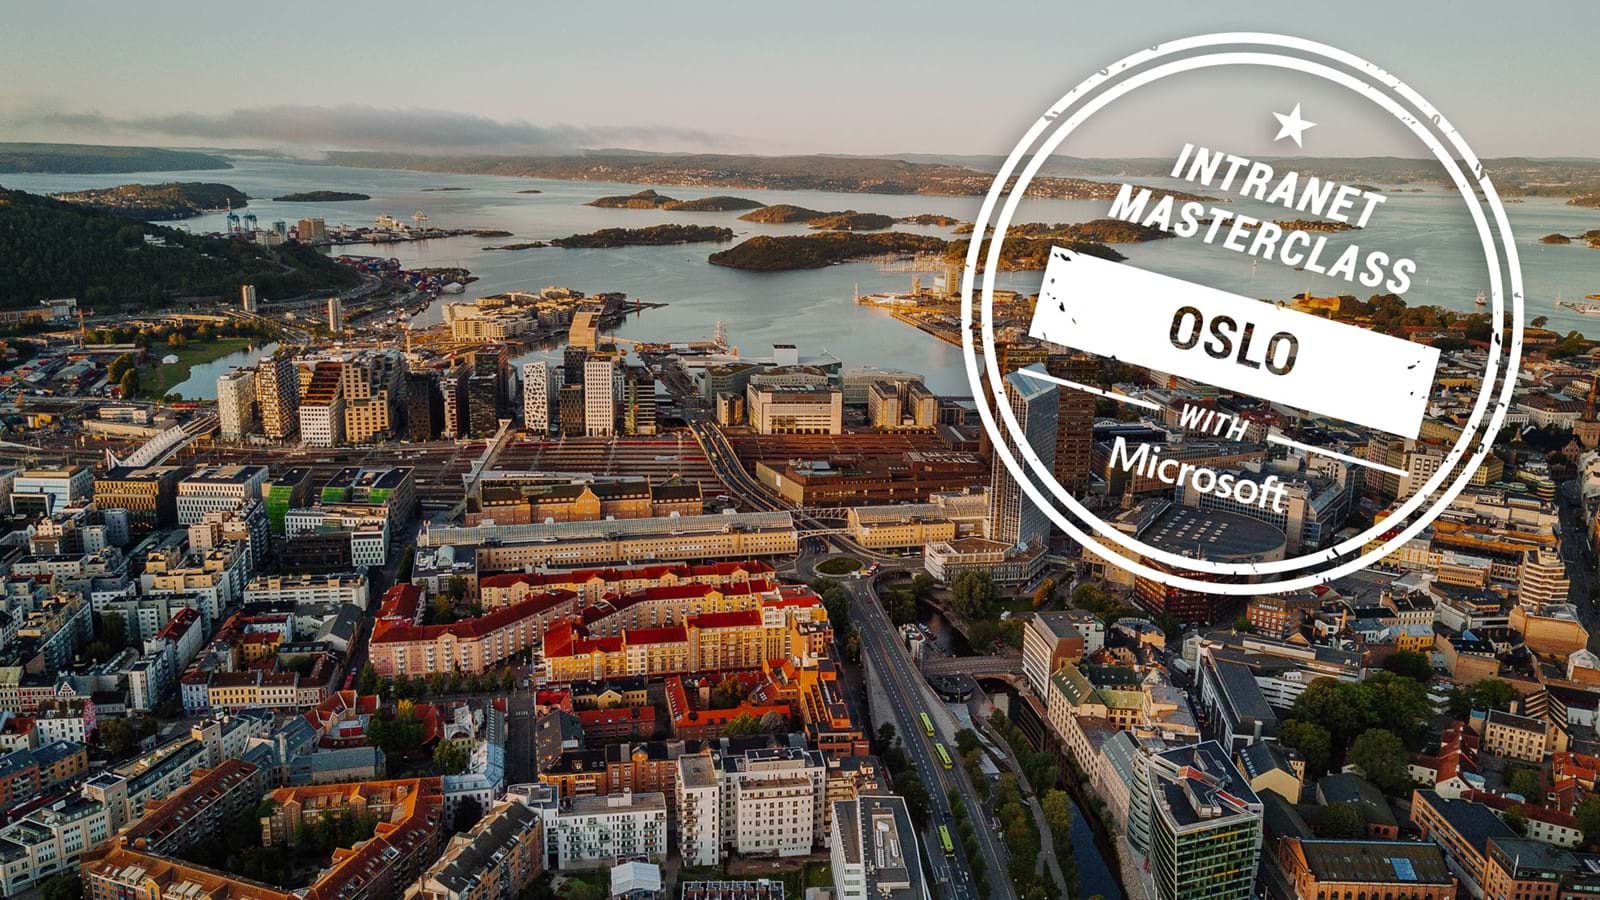 Unily's FREE Virtual Intranet Masterclass in Oslo